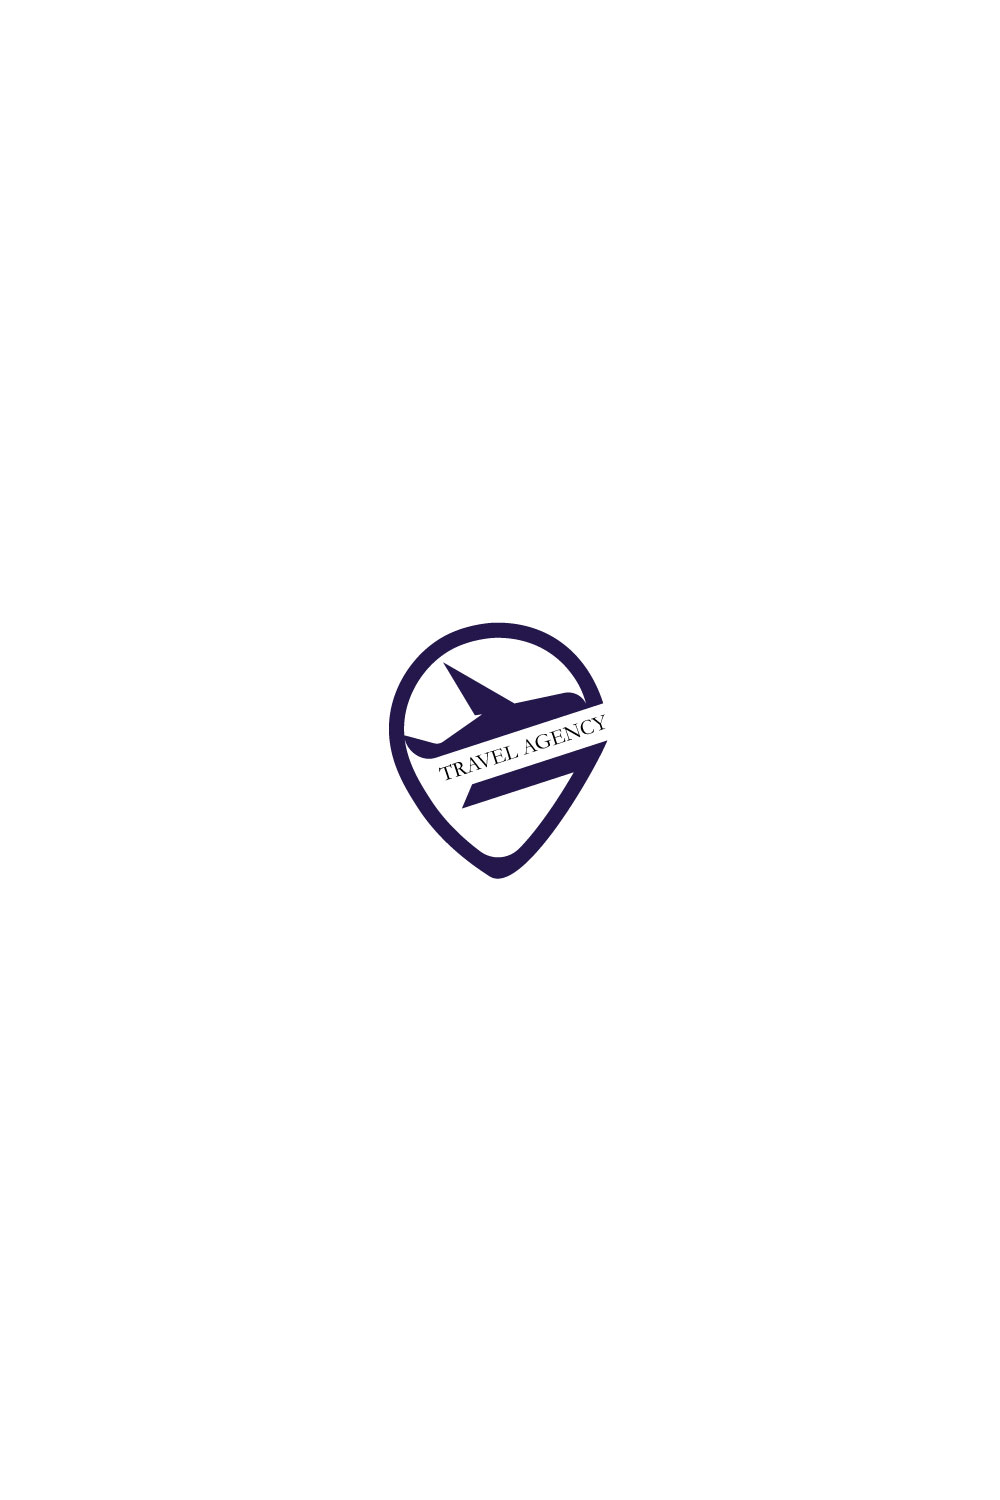 travel agency logo pint 356